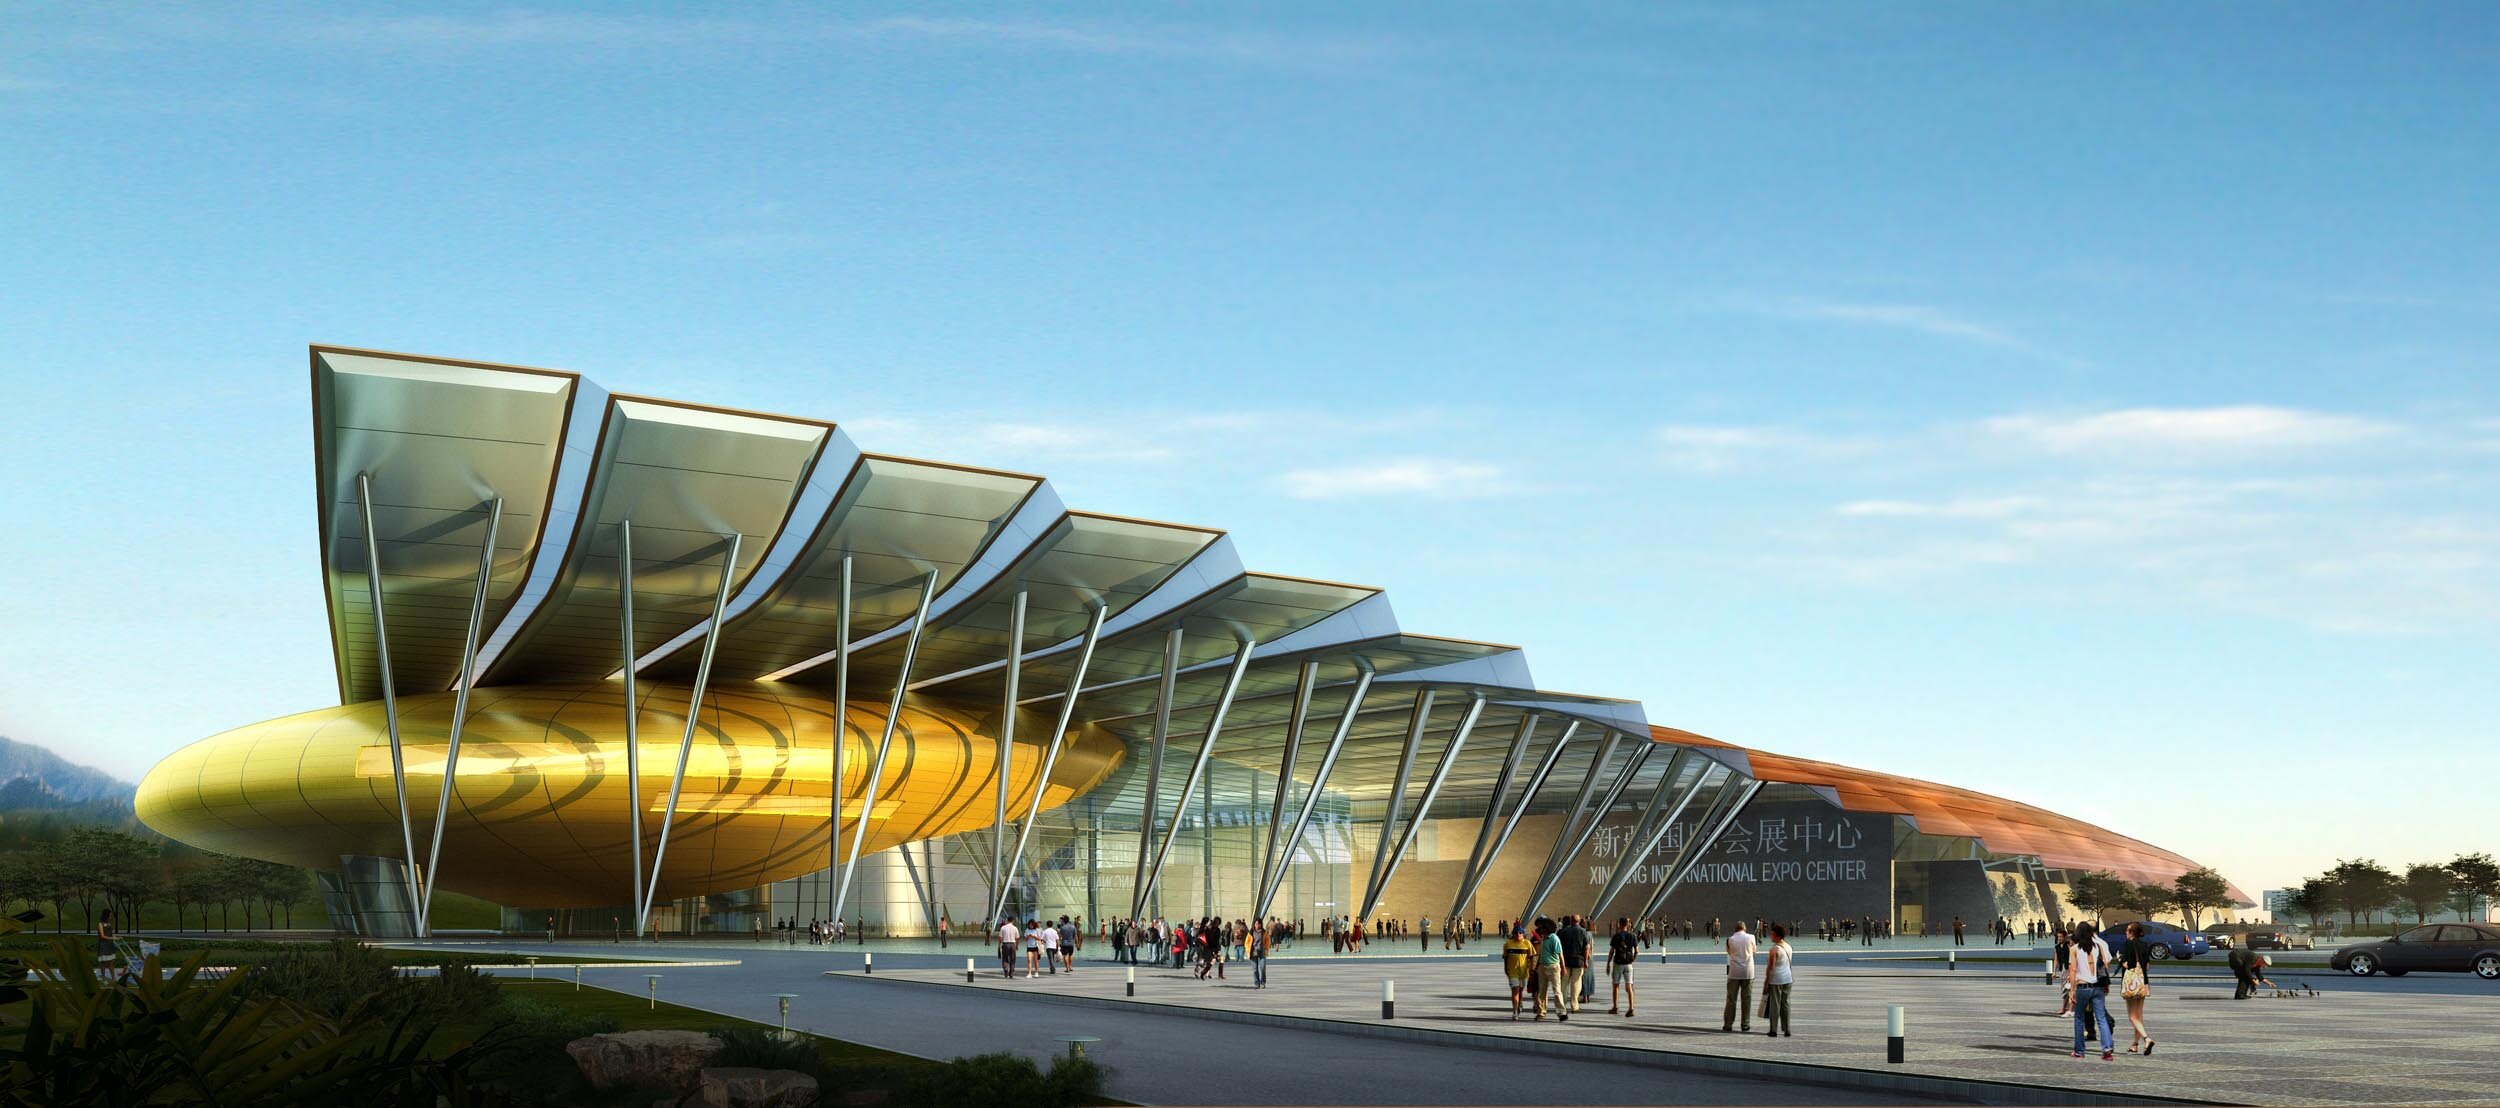 NDA-4. Urumqi Exhibition Center (1).jpg